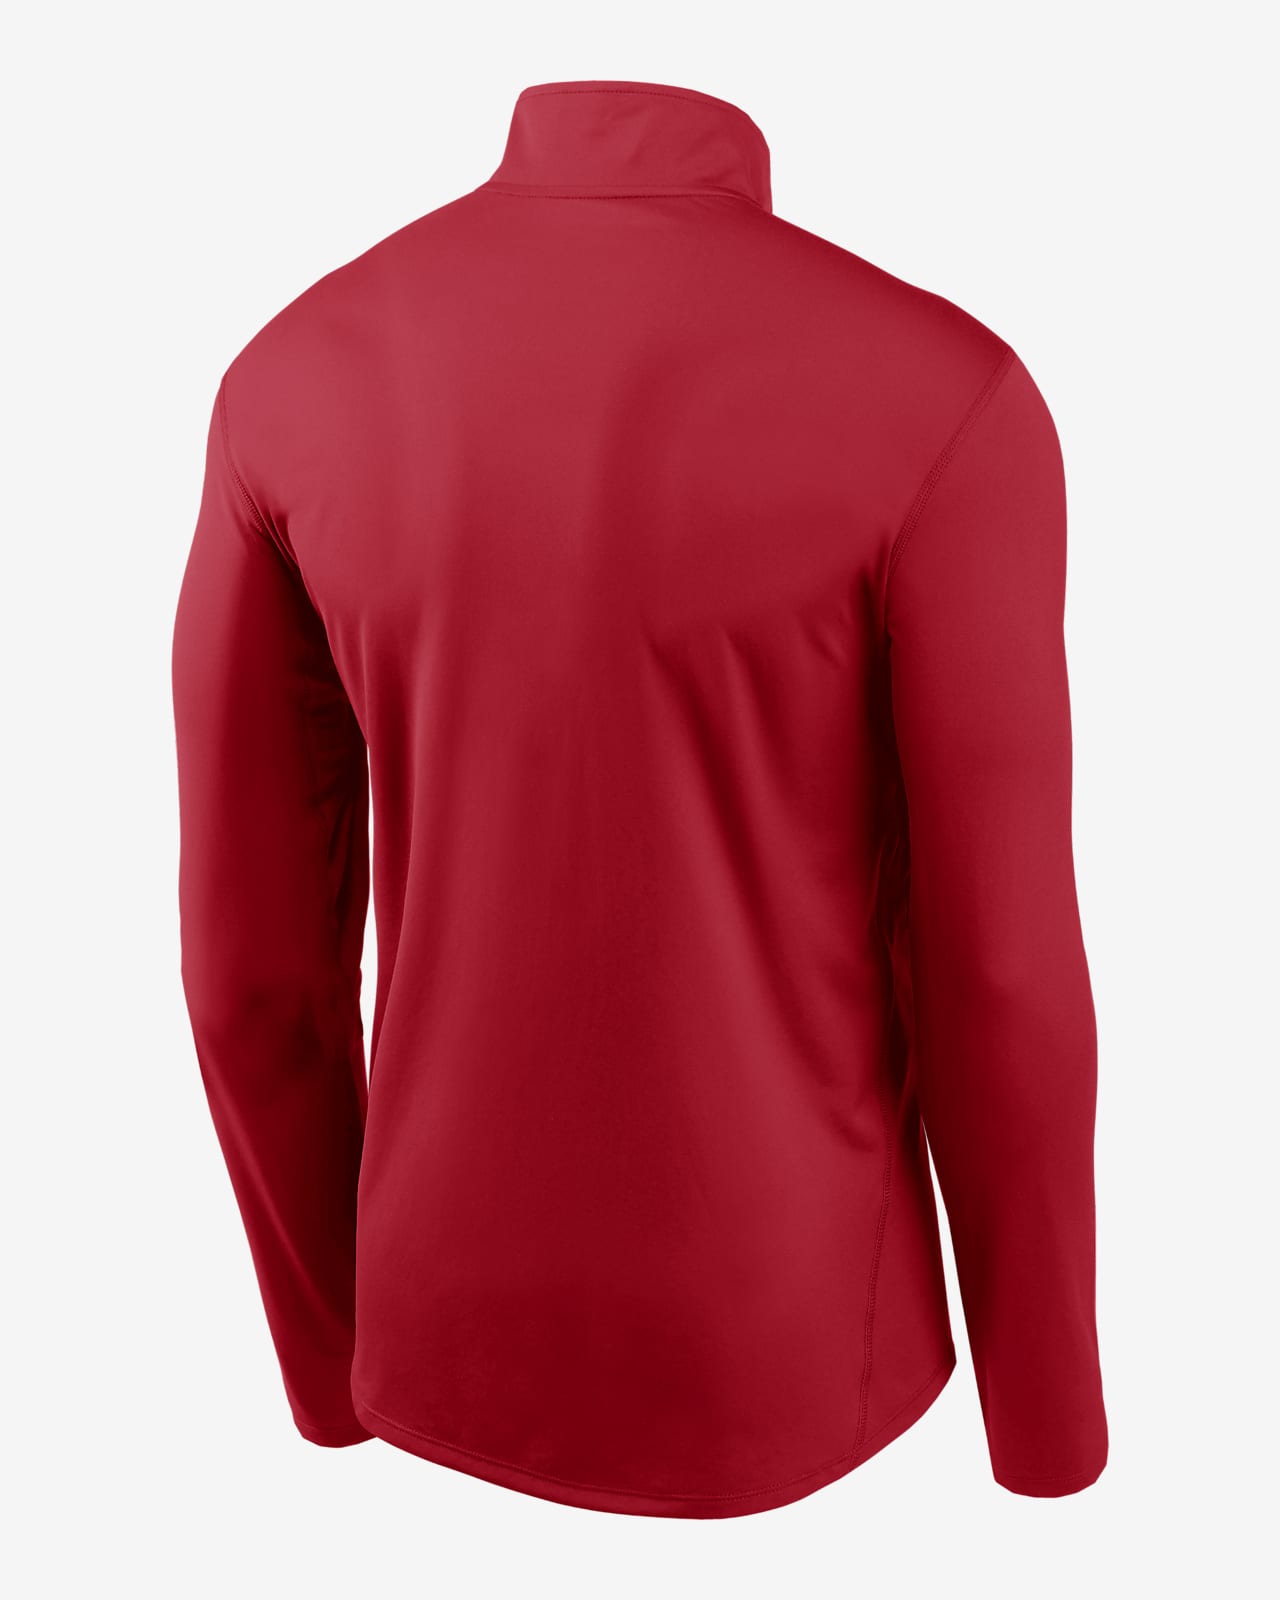 Nike St Louis Cardinals Mens Red Hot Jacket Short Sleeve Jacket